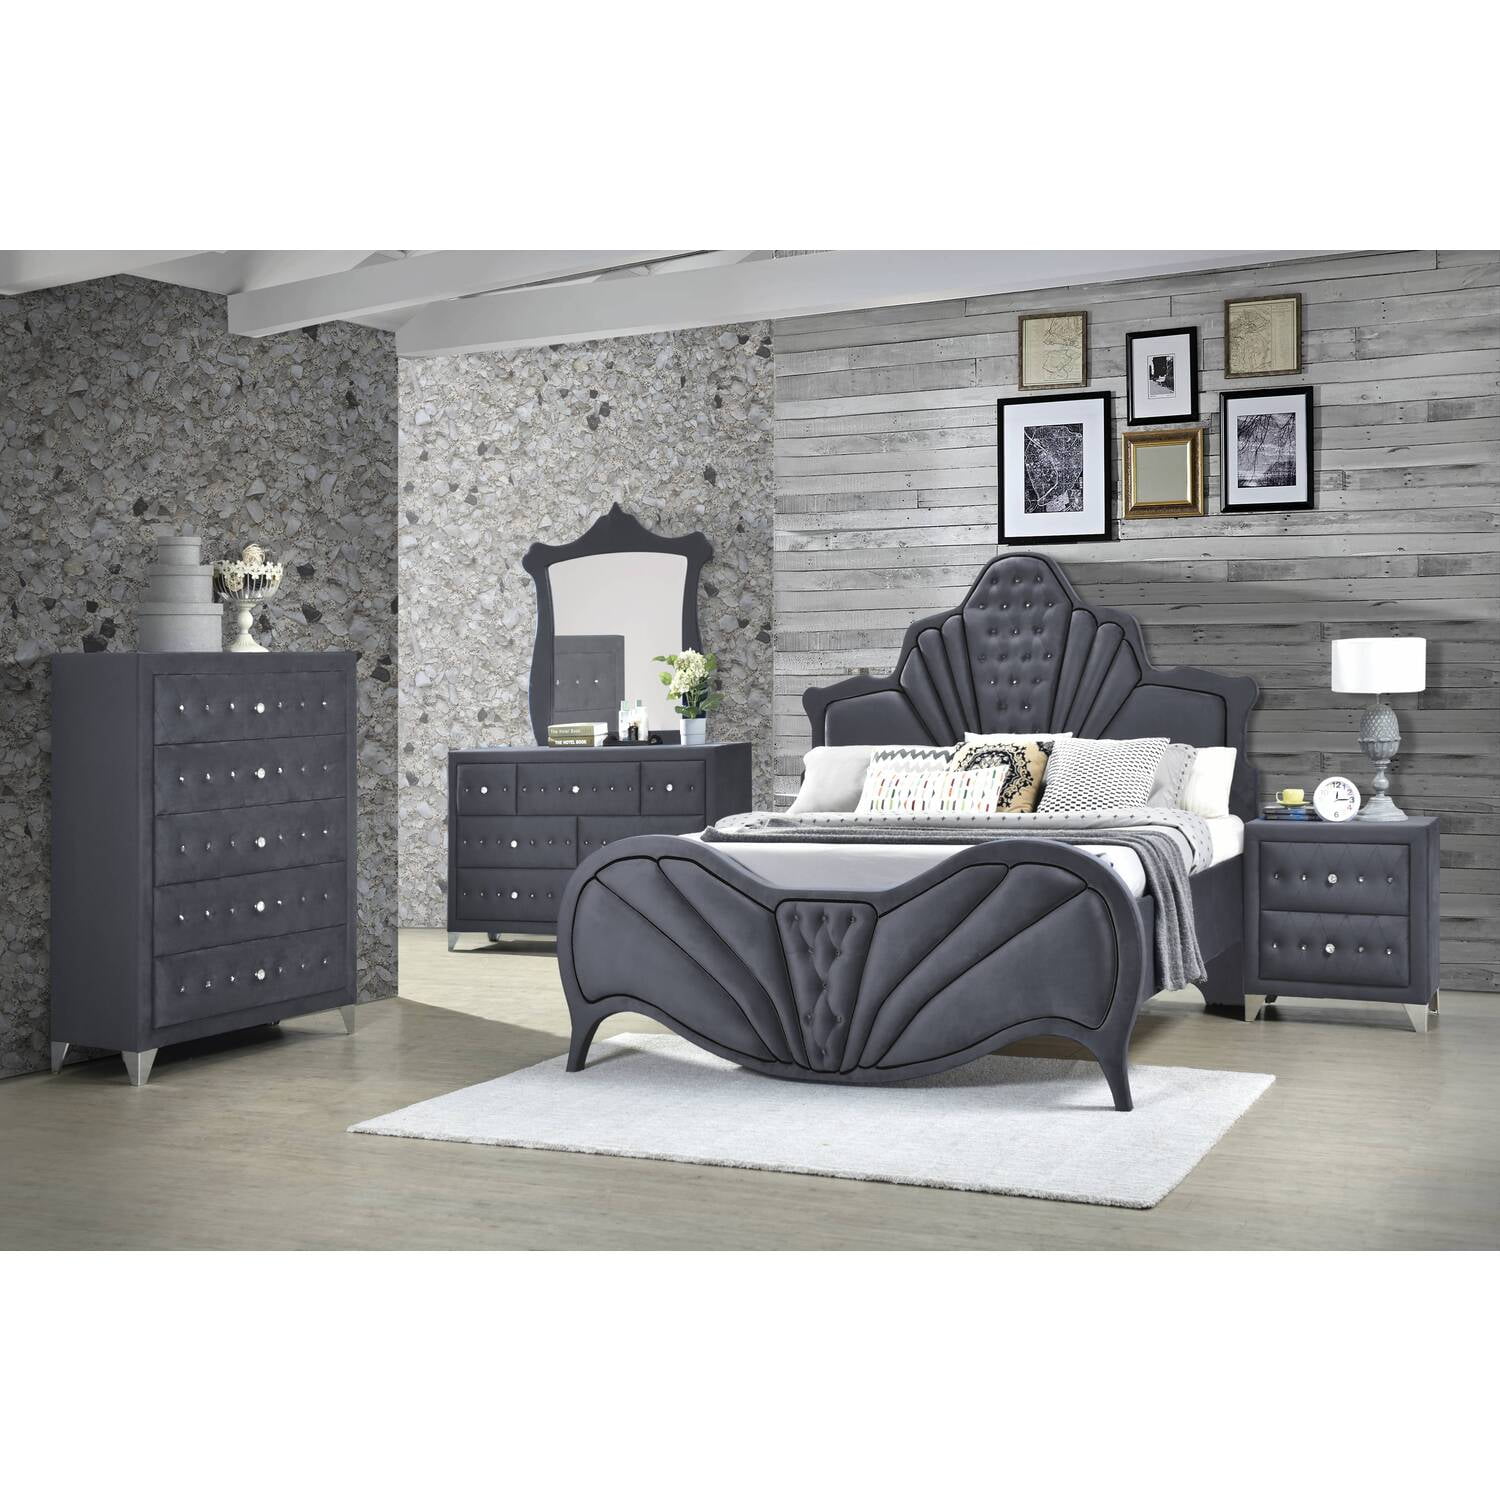 Picture of Acme Furniture 24227EK 90 x 85 x 70 in. Dante Eastern Bed, Gray Velvet - King Size